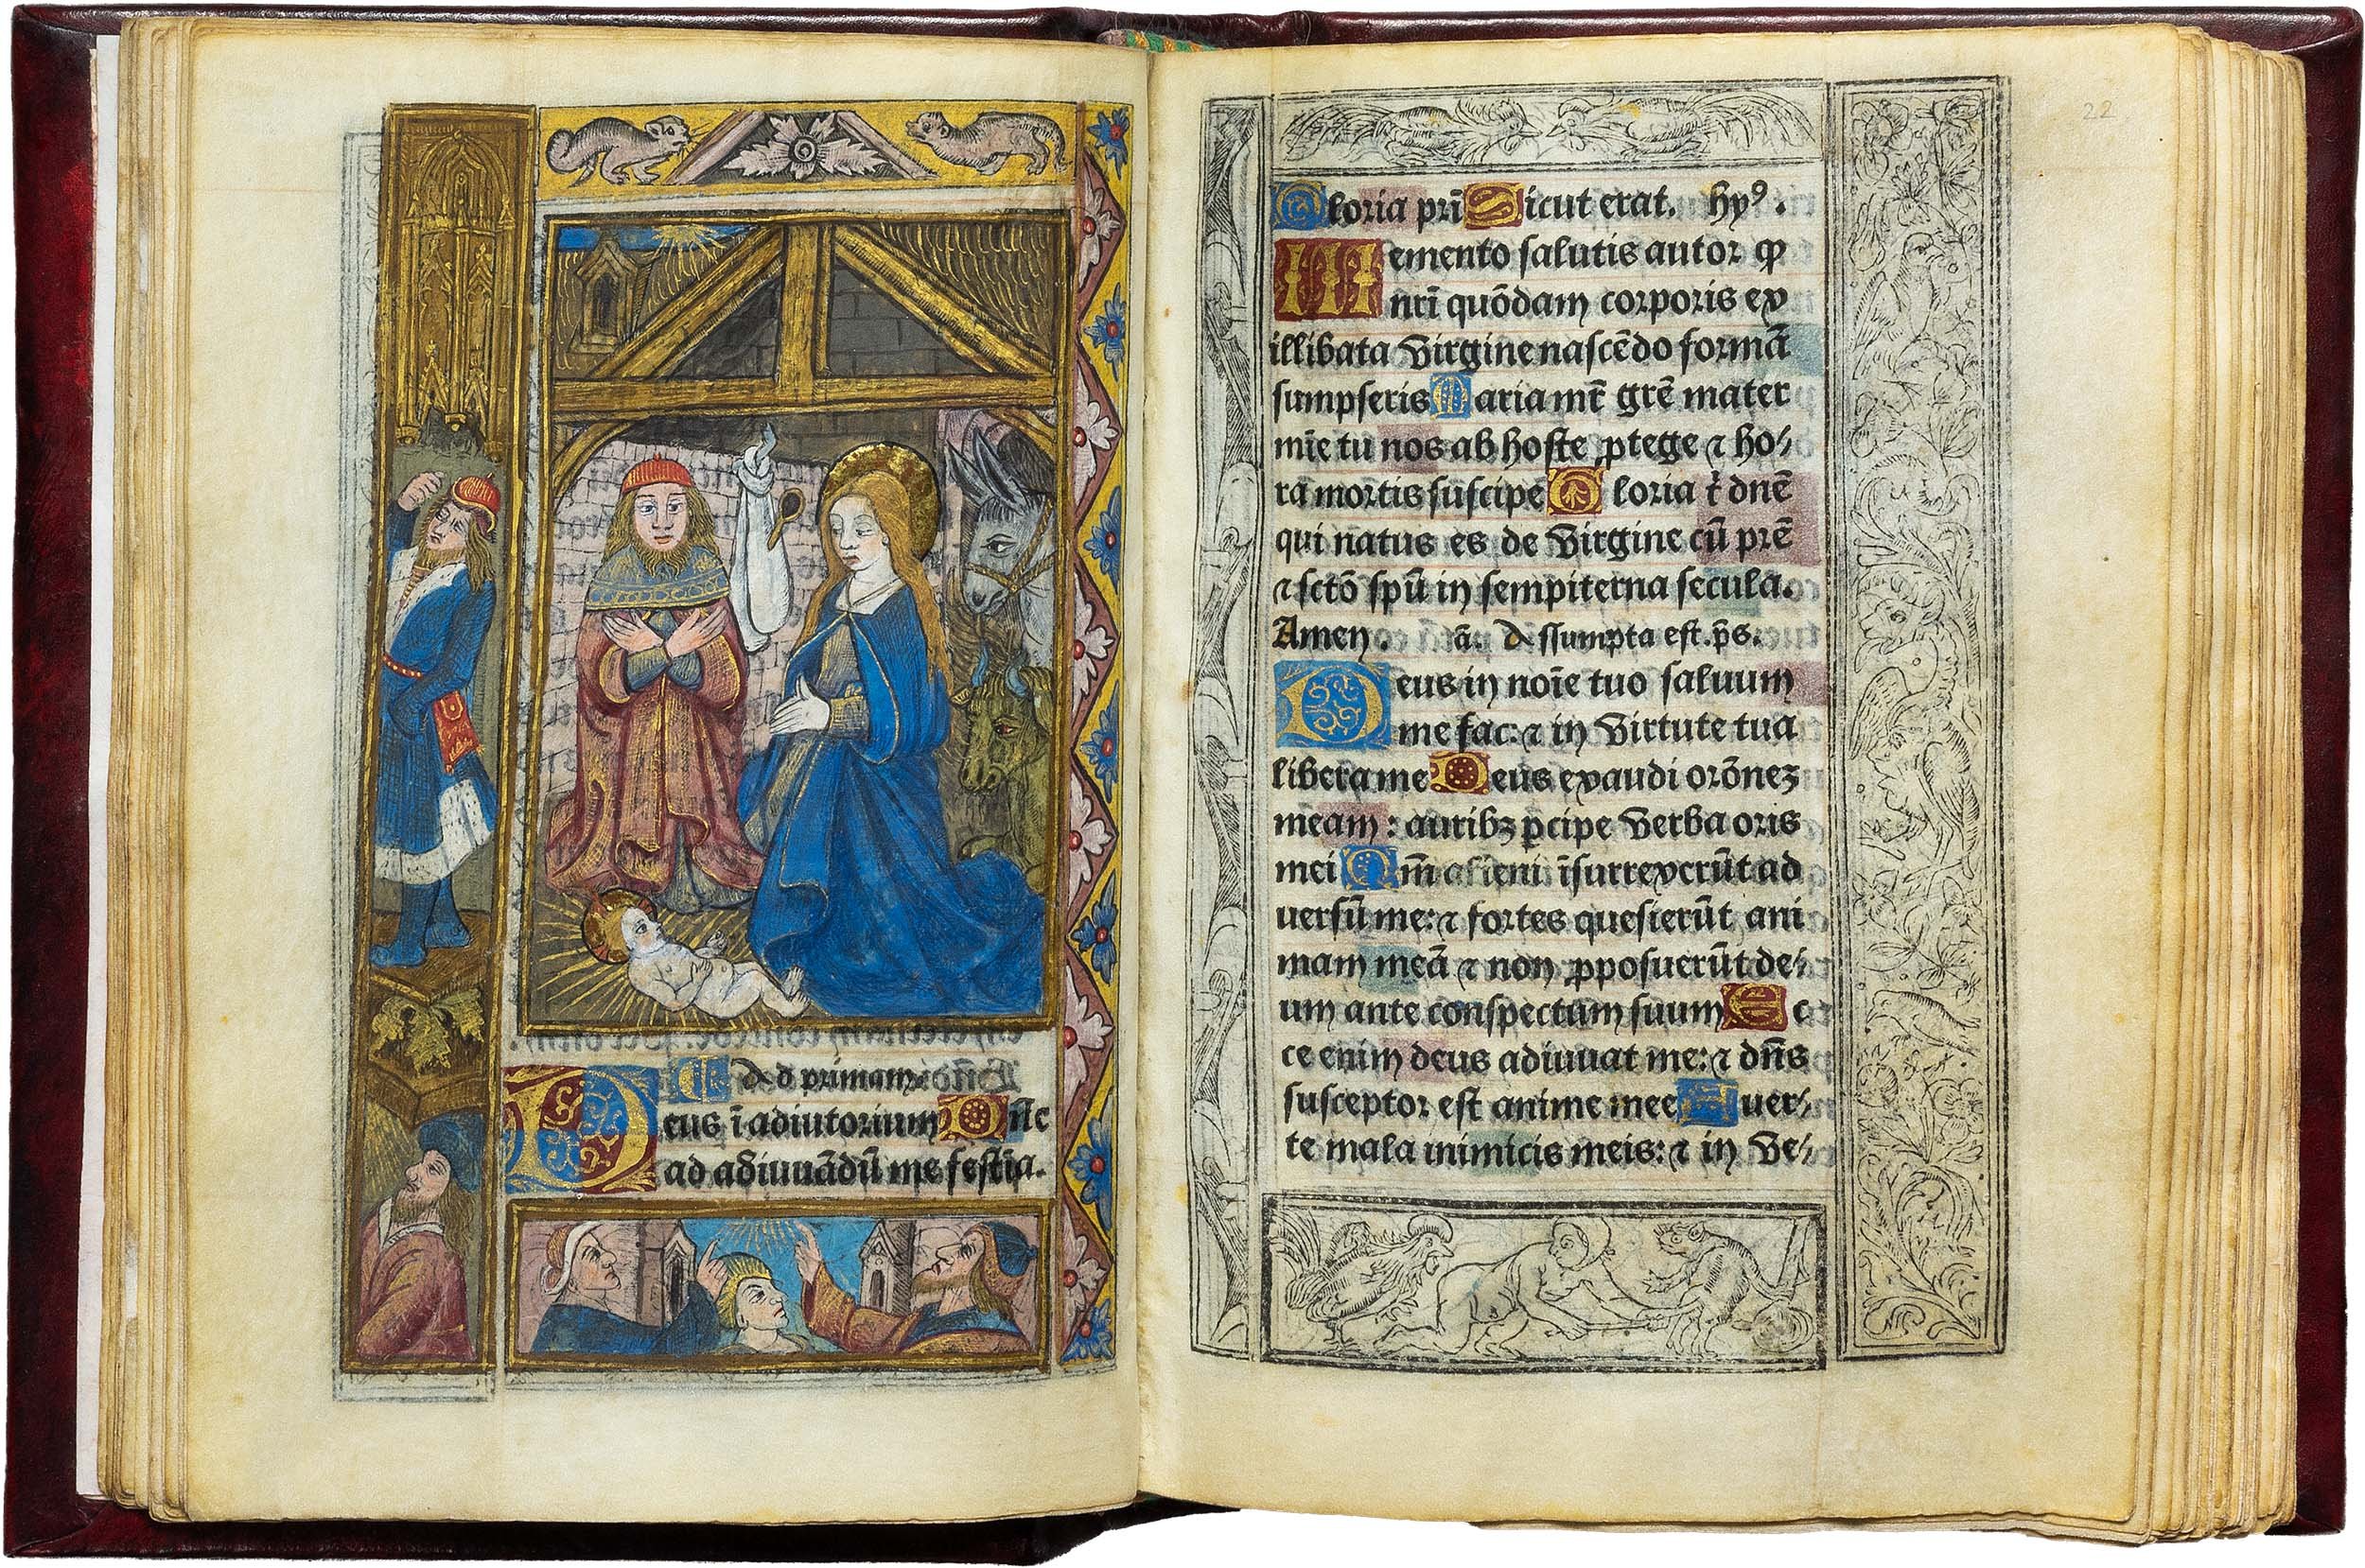 horae-bmv-early-printed-book-of-hours-1487-dupre-23.jpg